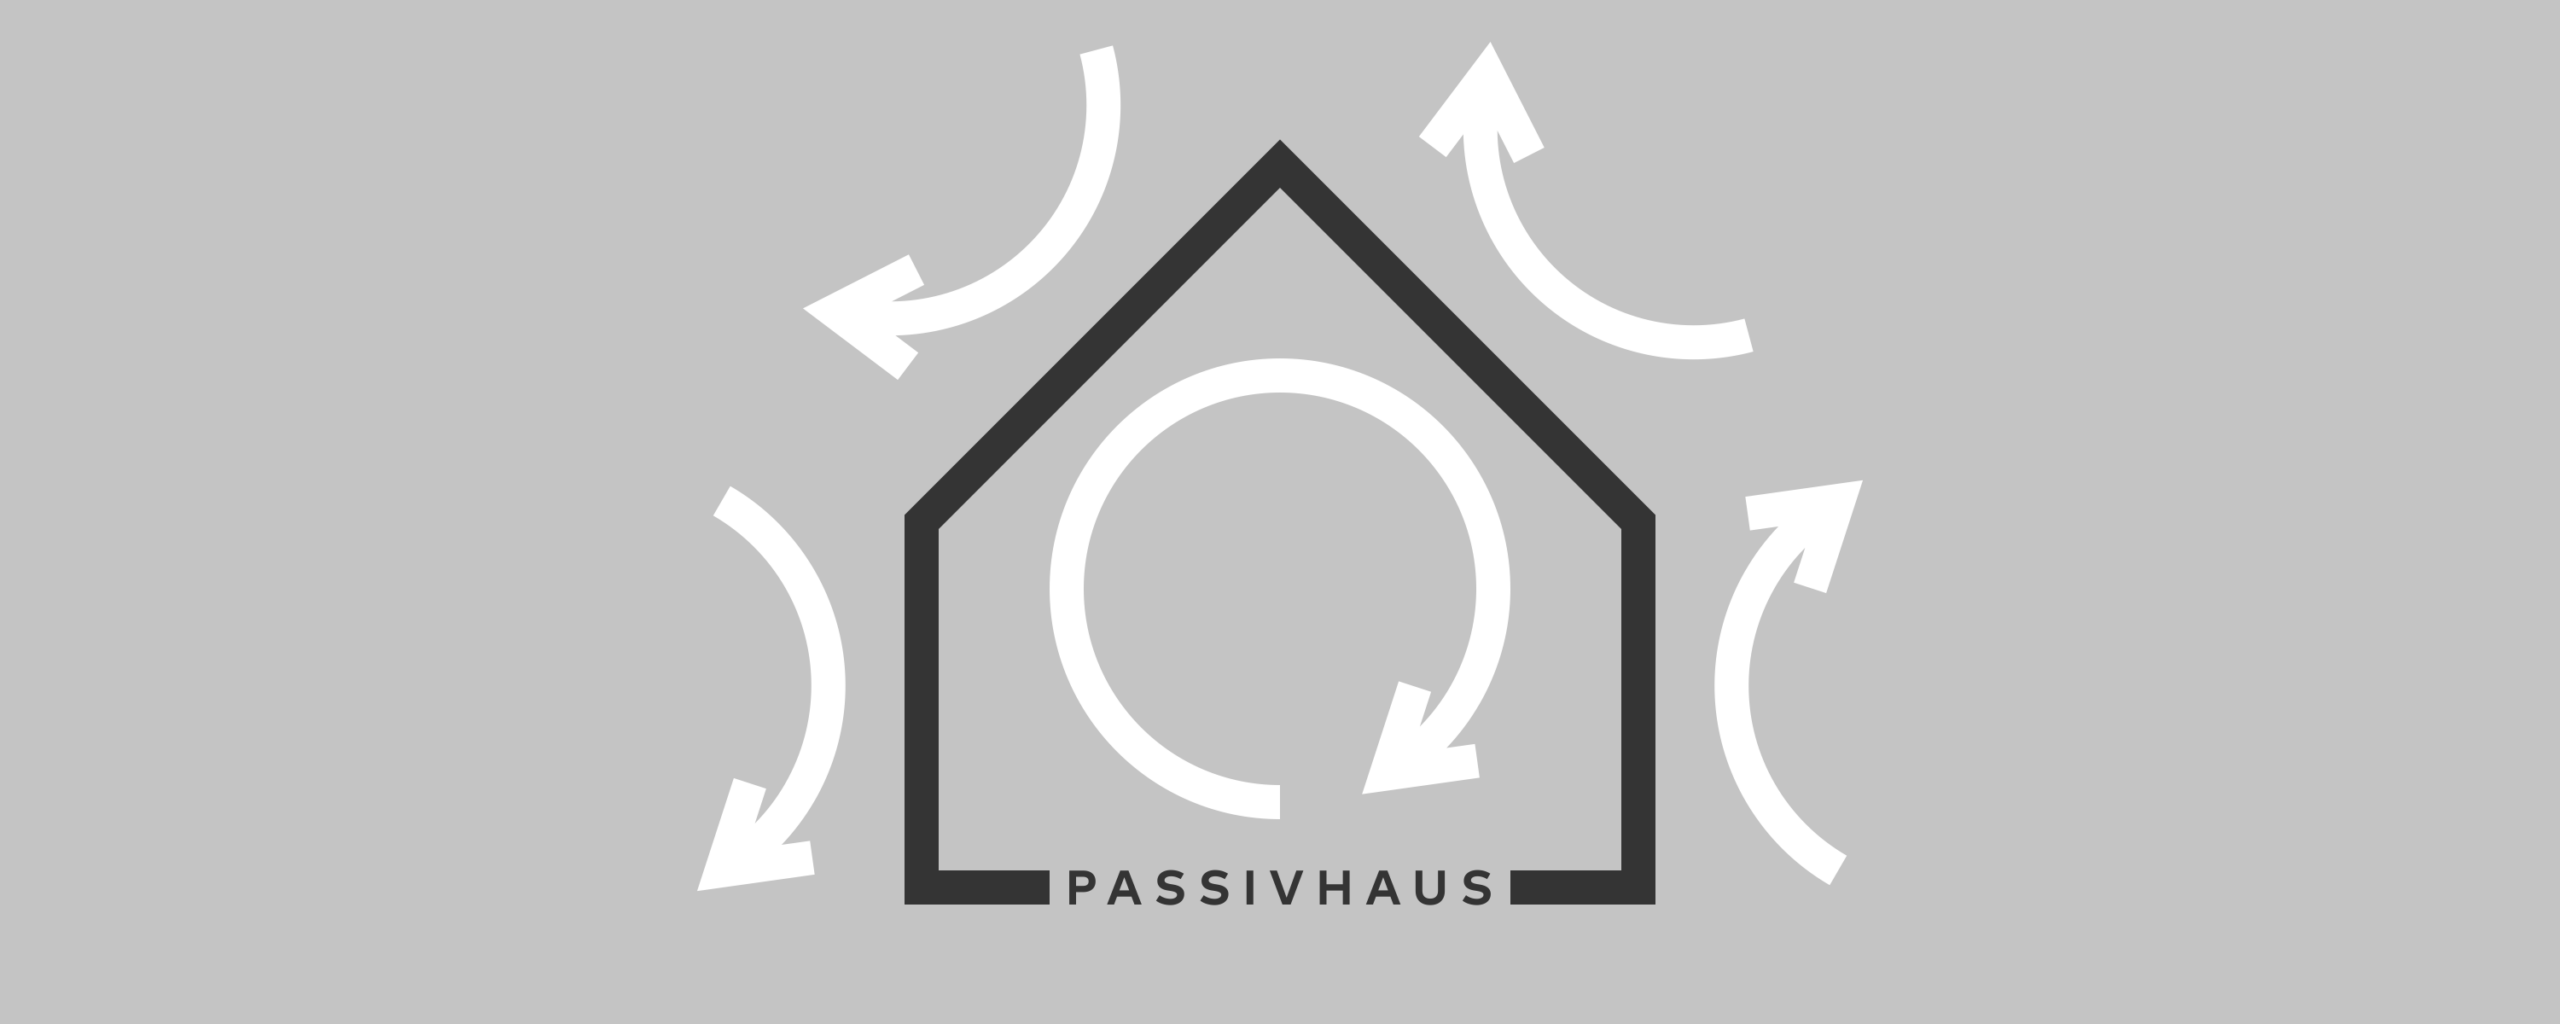 Passivhaus standard